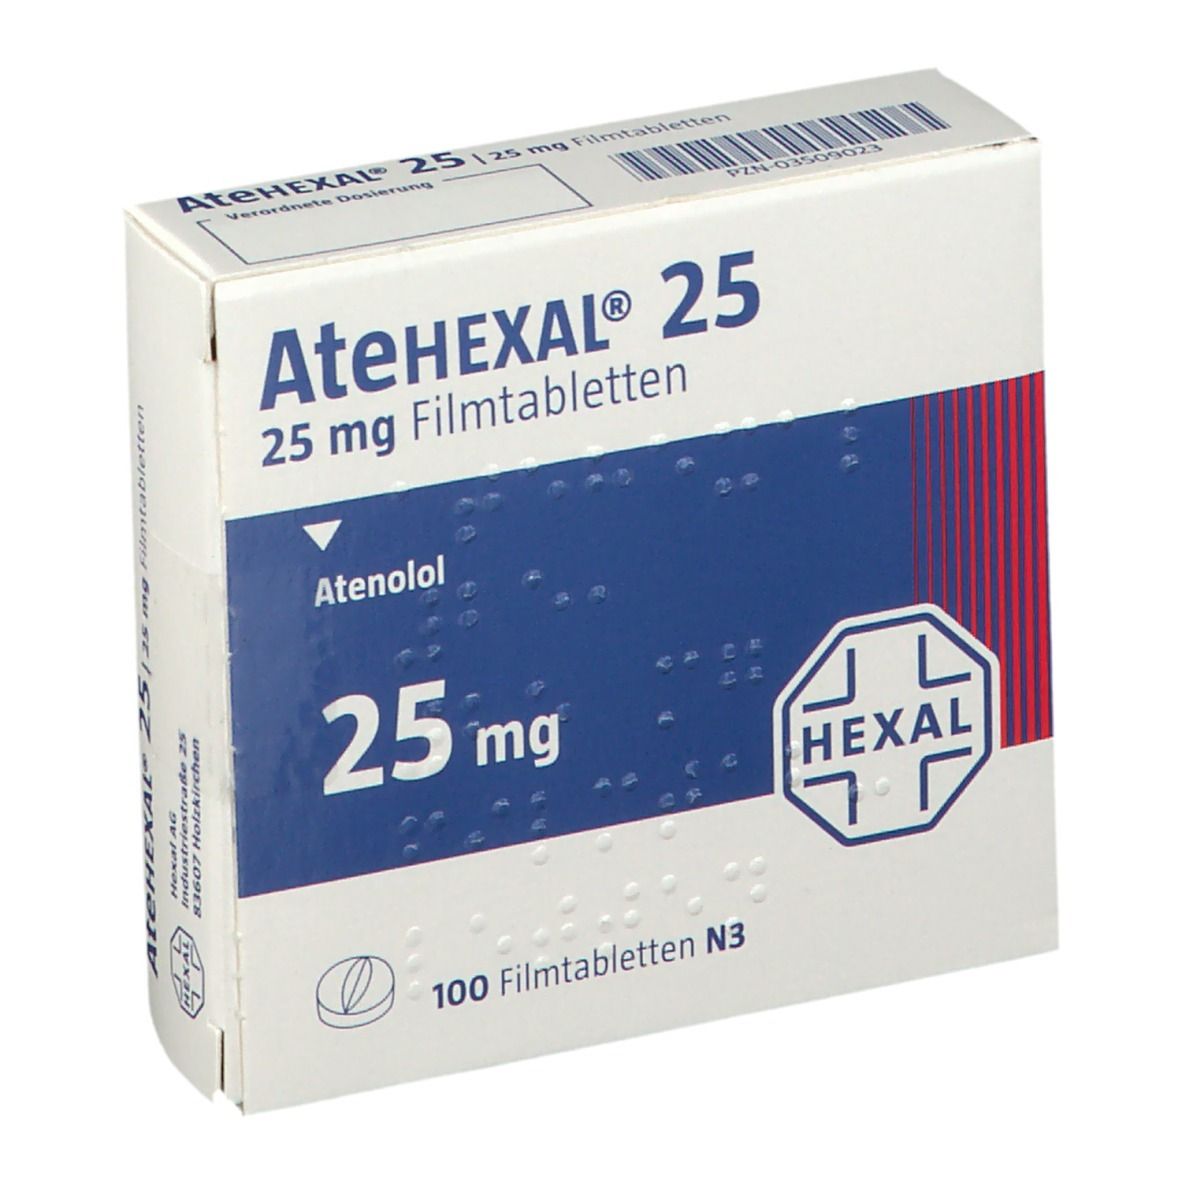 AteHEXAL® 25 mg